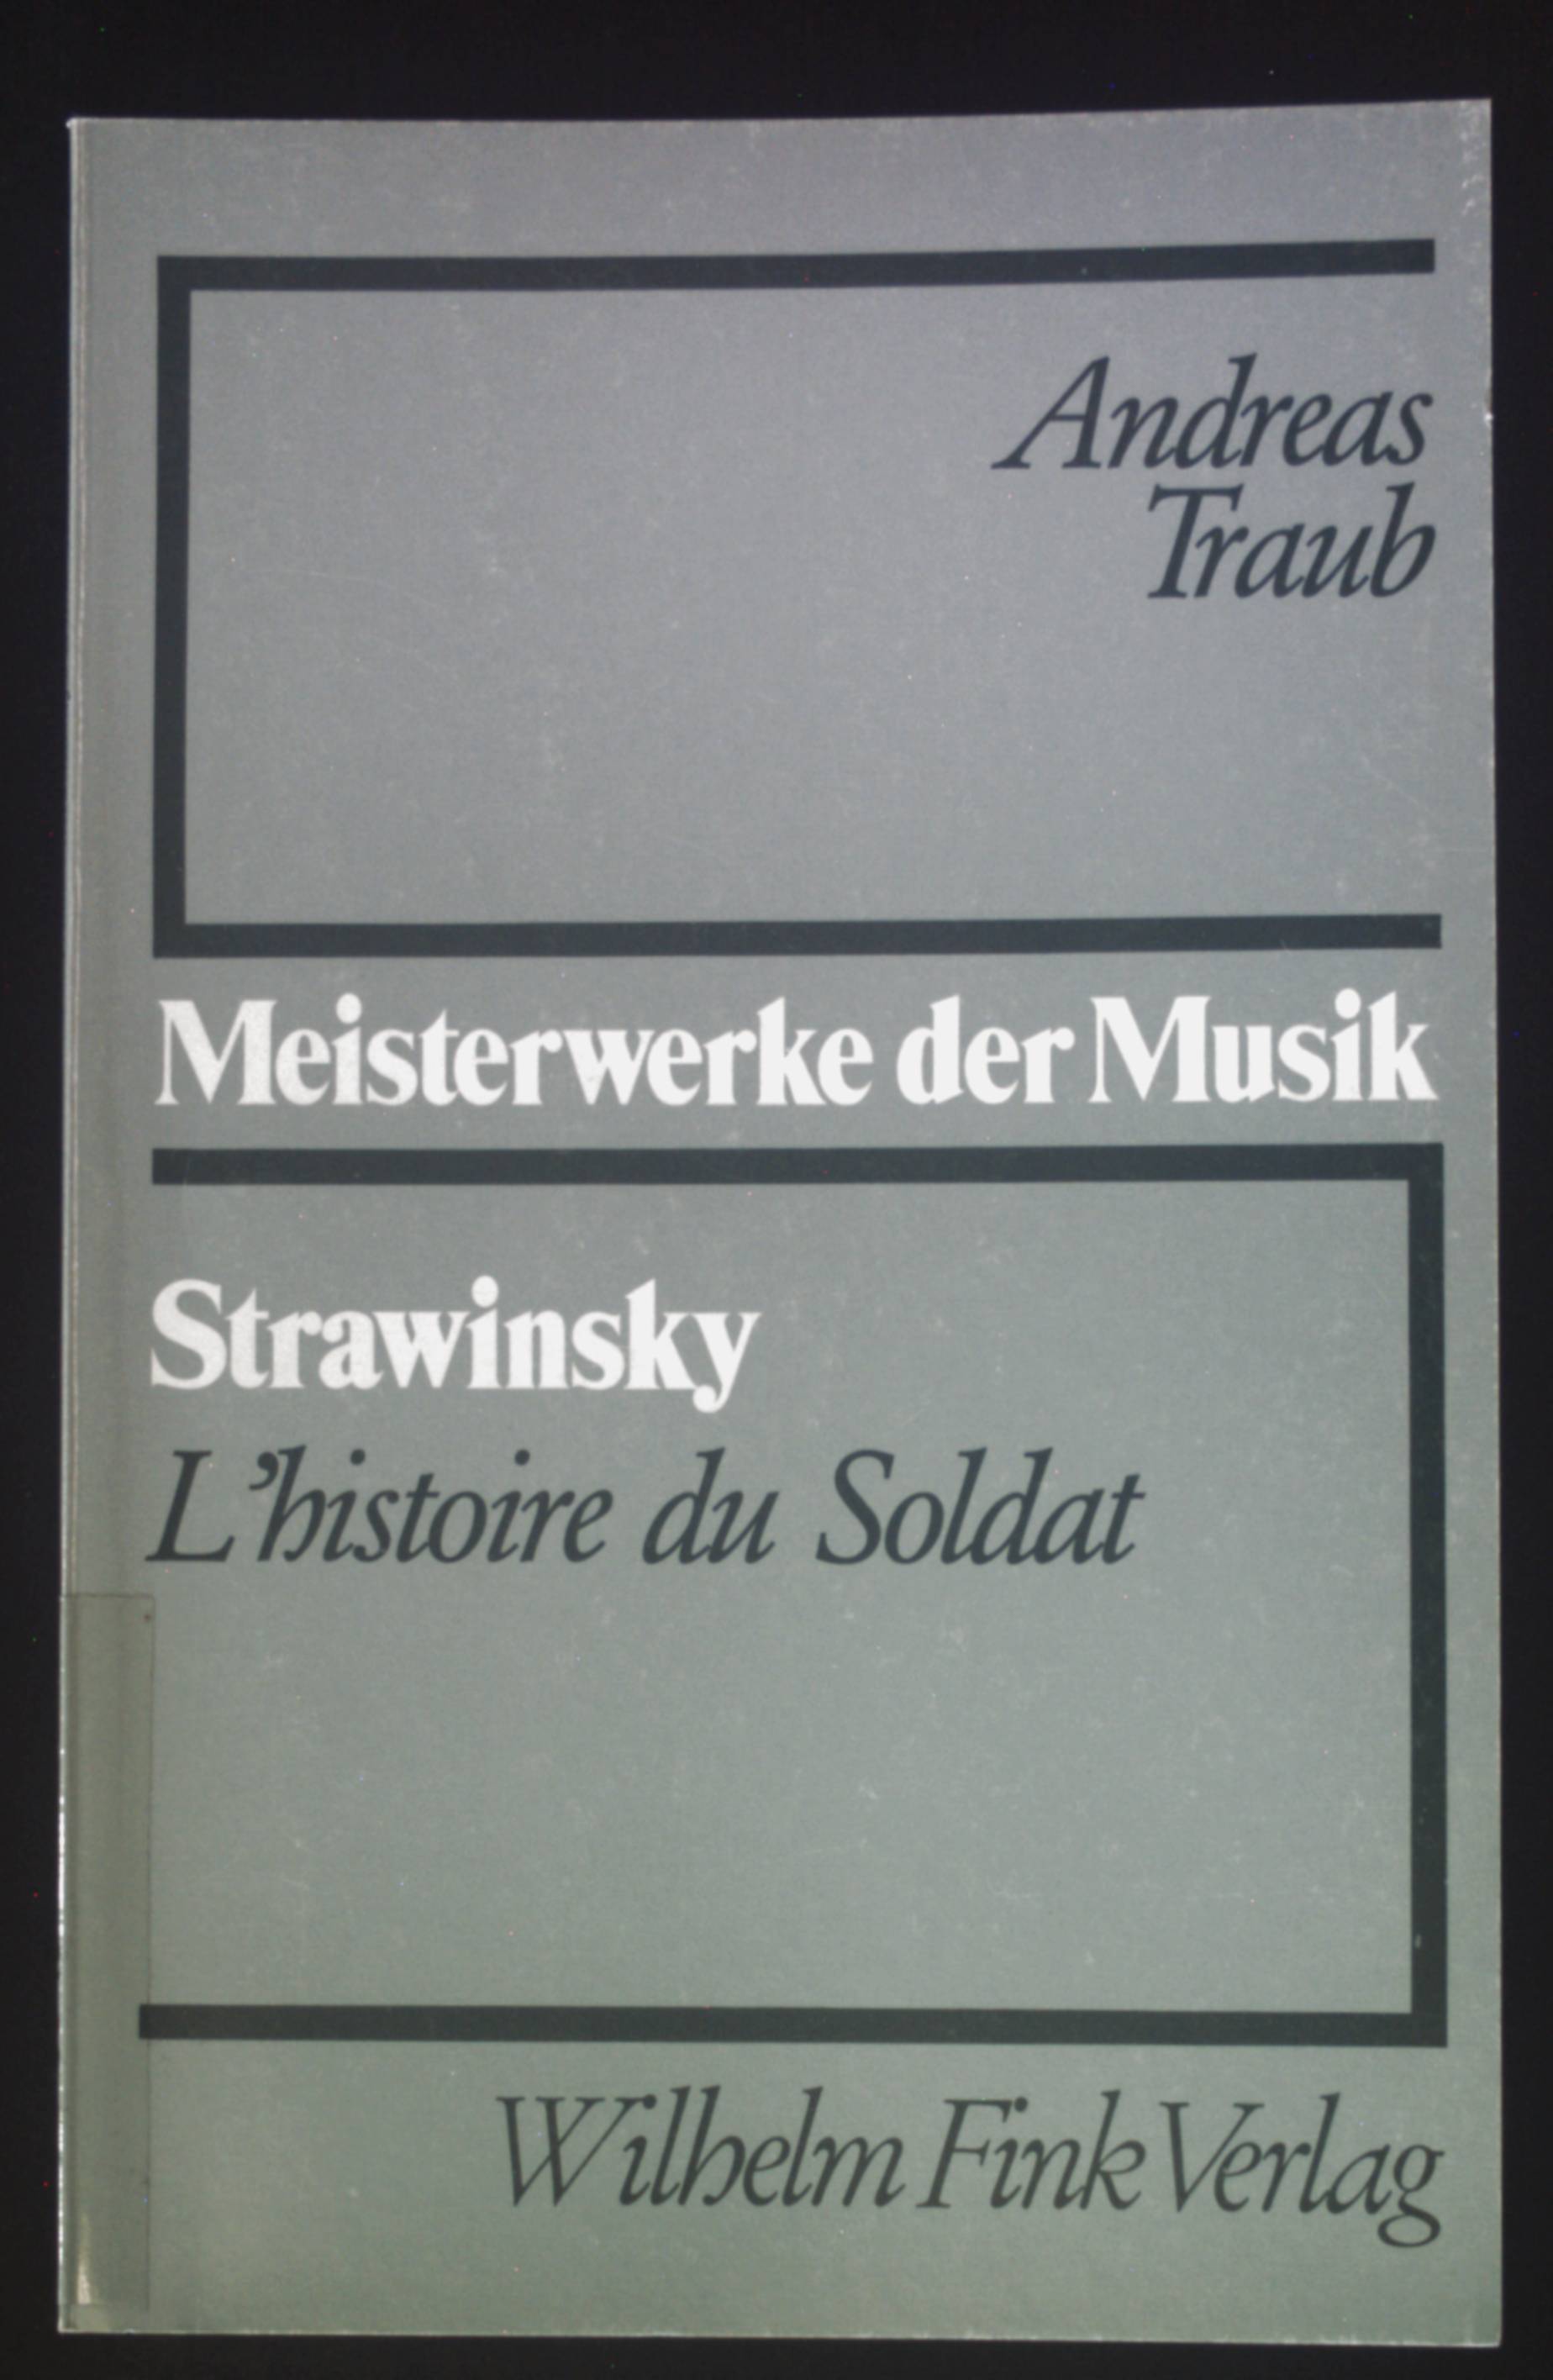 Igor Strawinsky, L'histoire du soldat. Meisterwerke der Musik ; H. 22 - Traub, Andreas